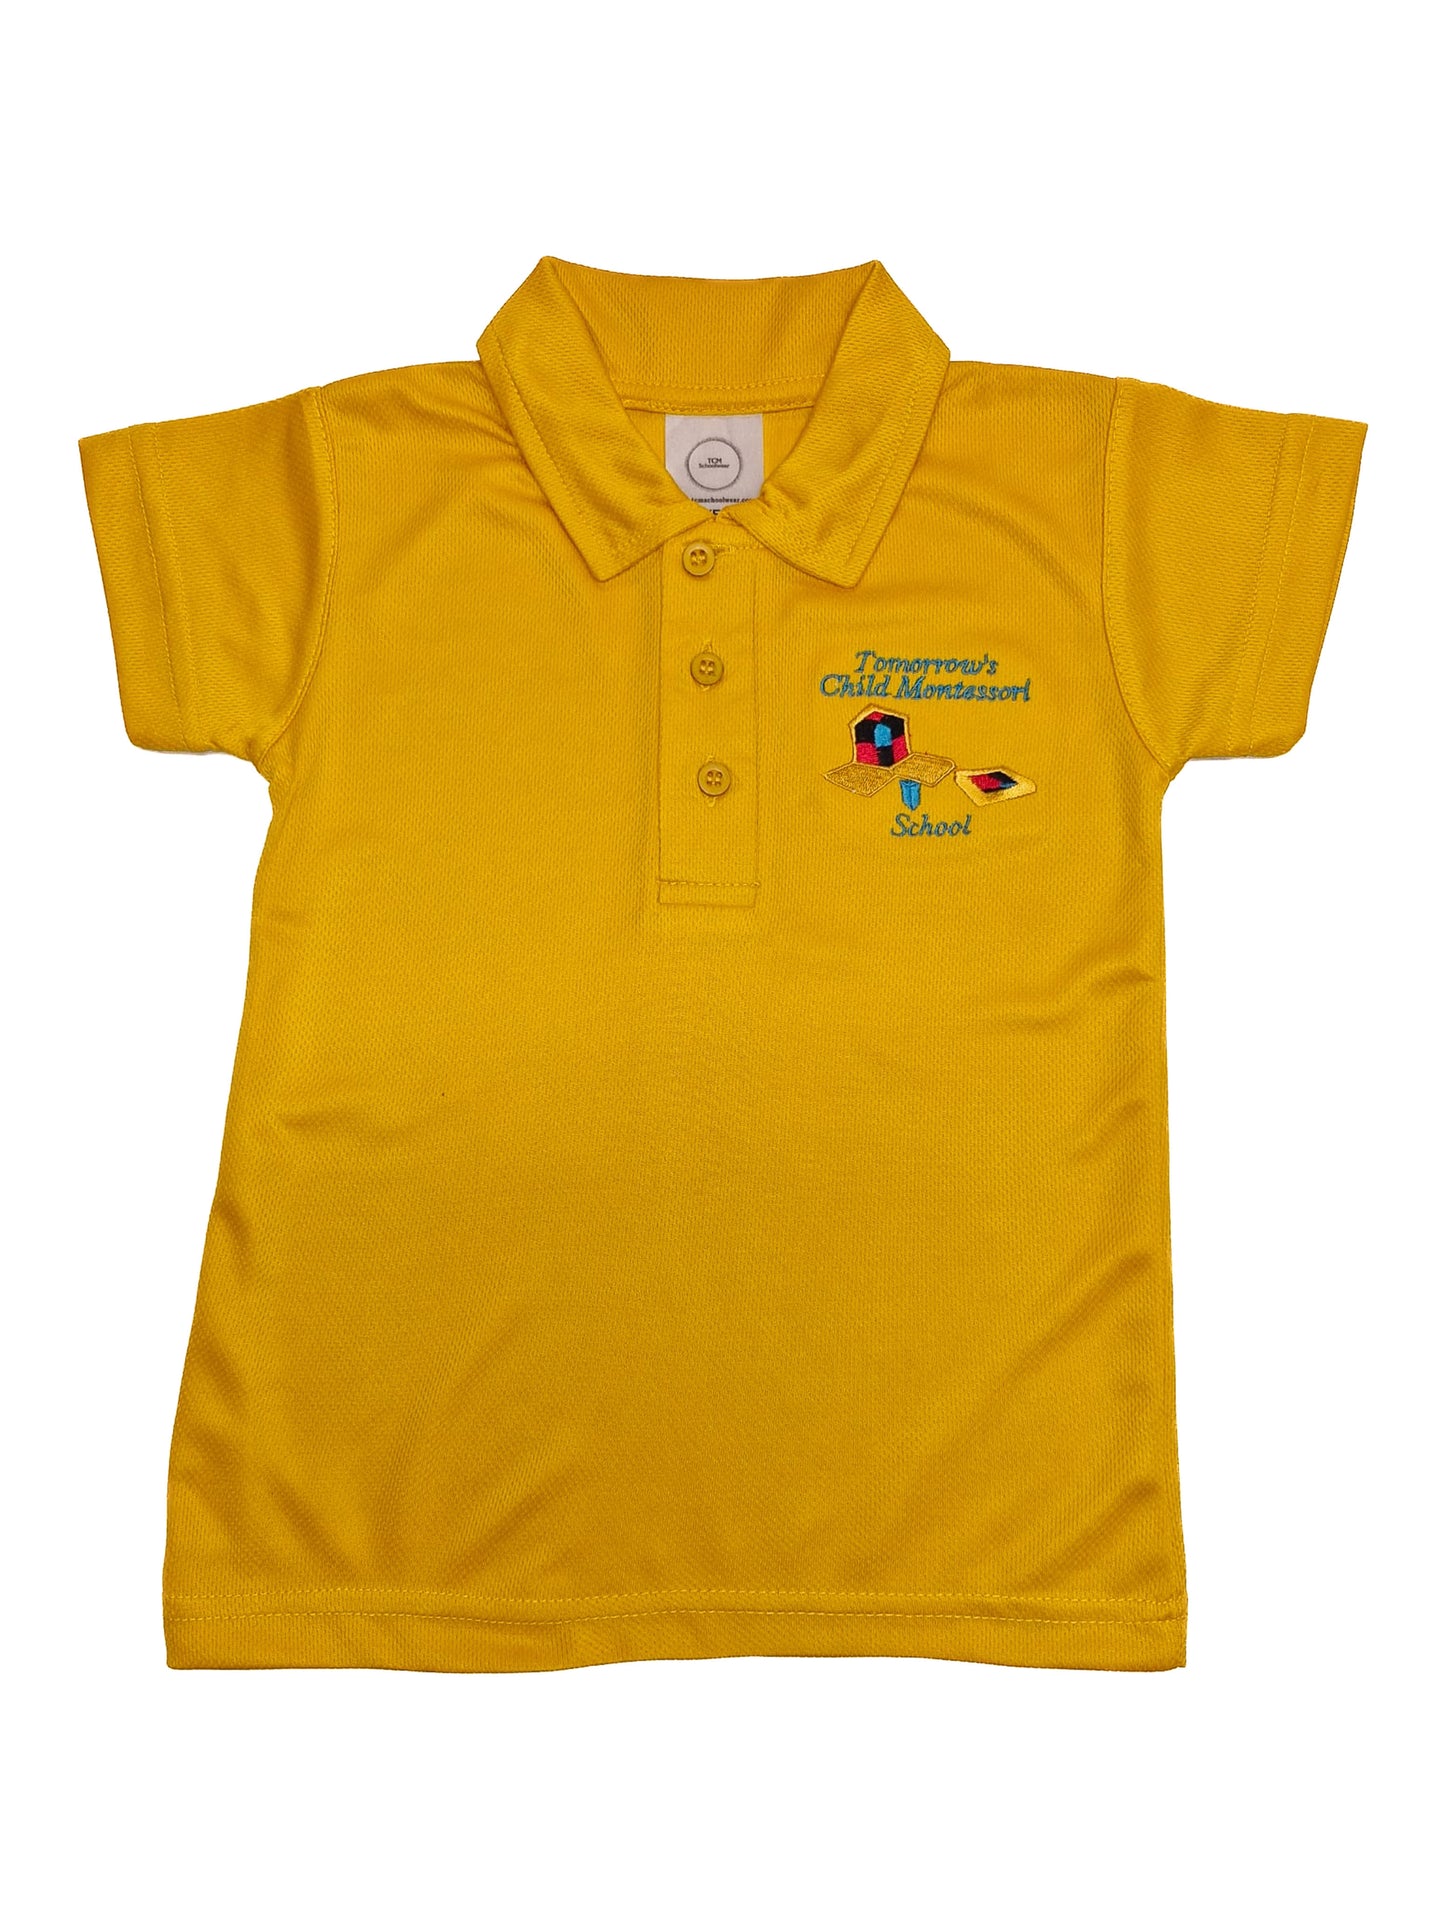 Tomorrow's Child Montessori - Polo Shirt